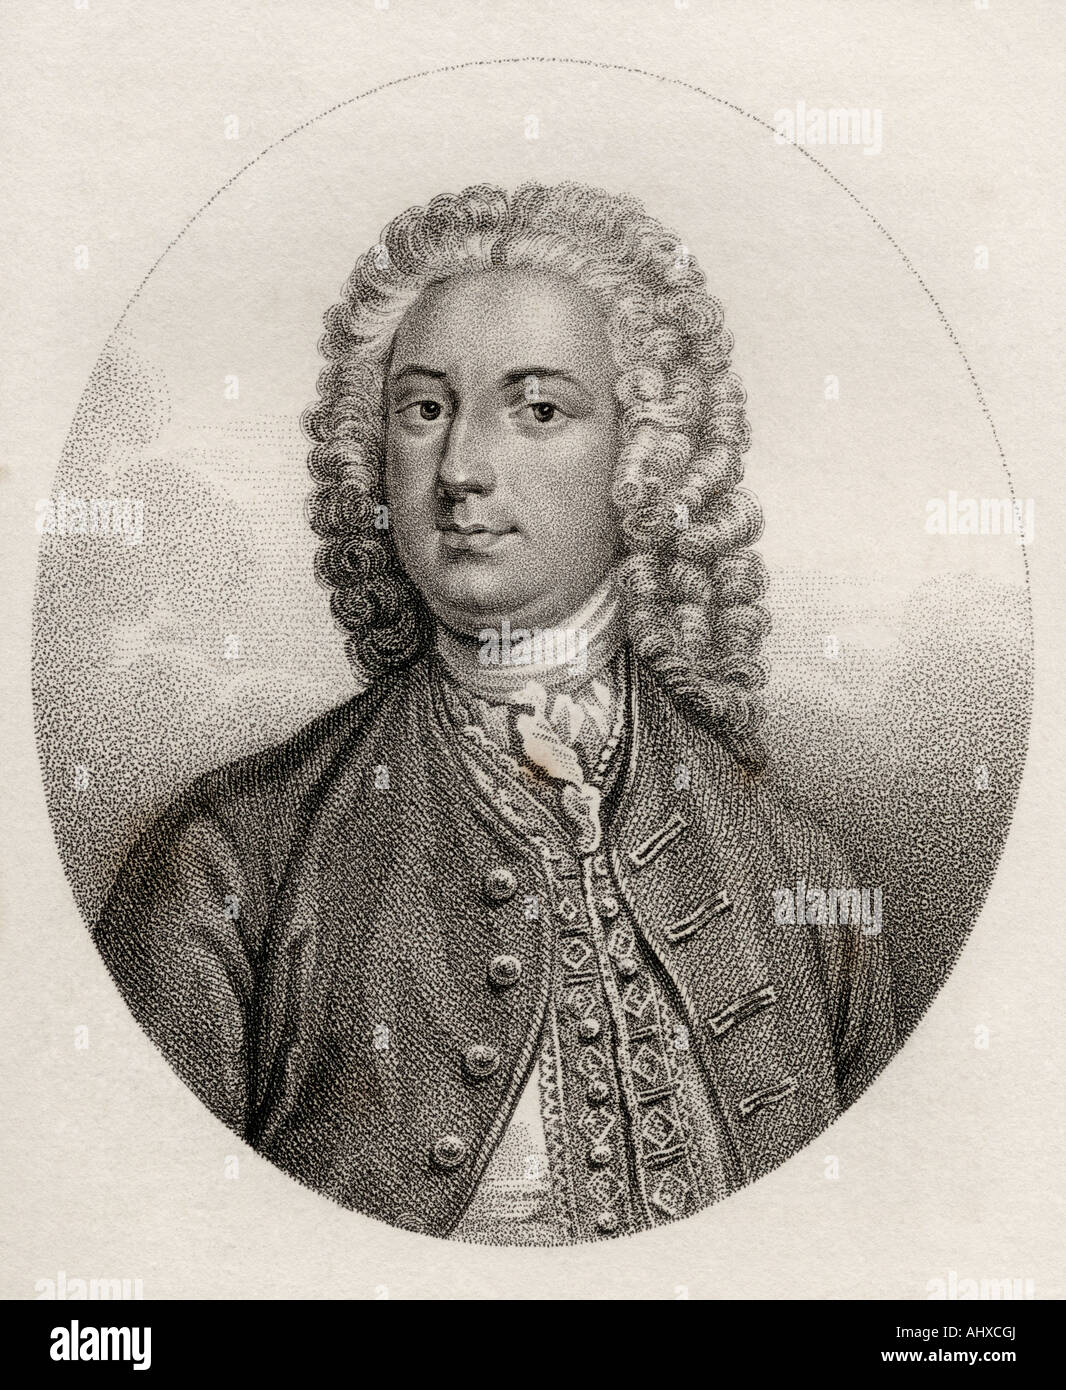 John Boyle, 5th Earl of Cork and Orrery, 1707 - 1762. English writer. Stock Photo